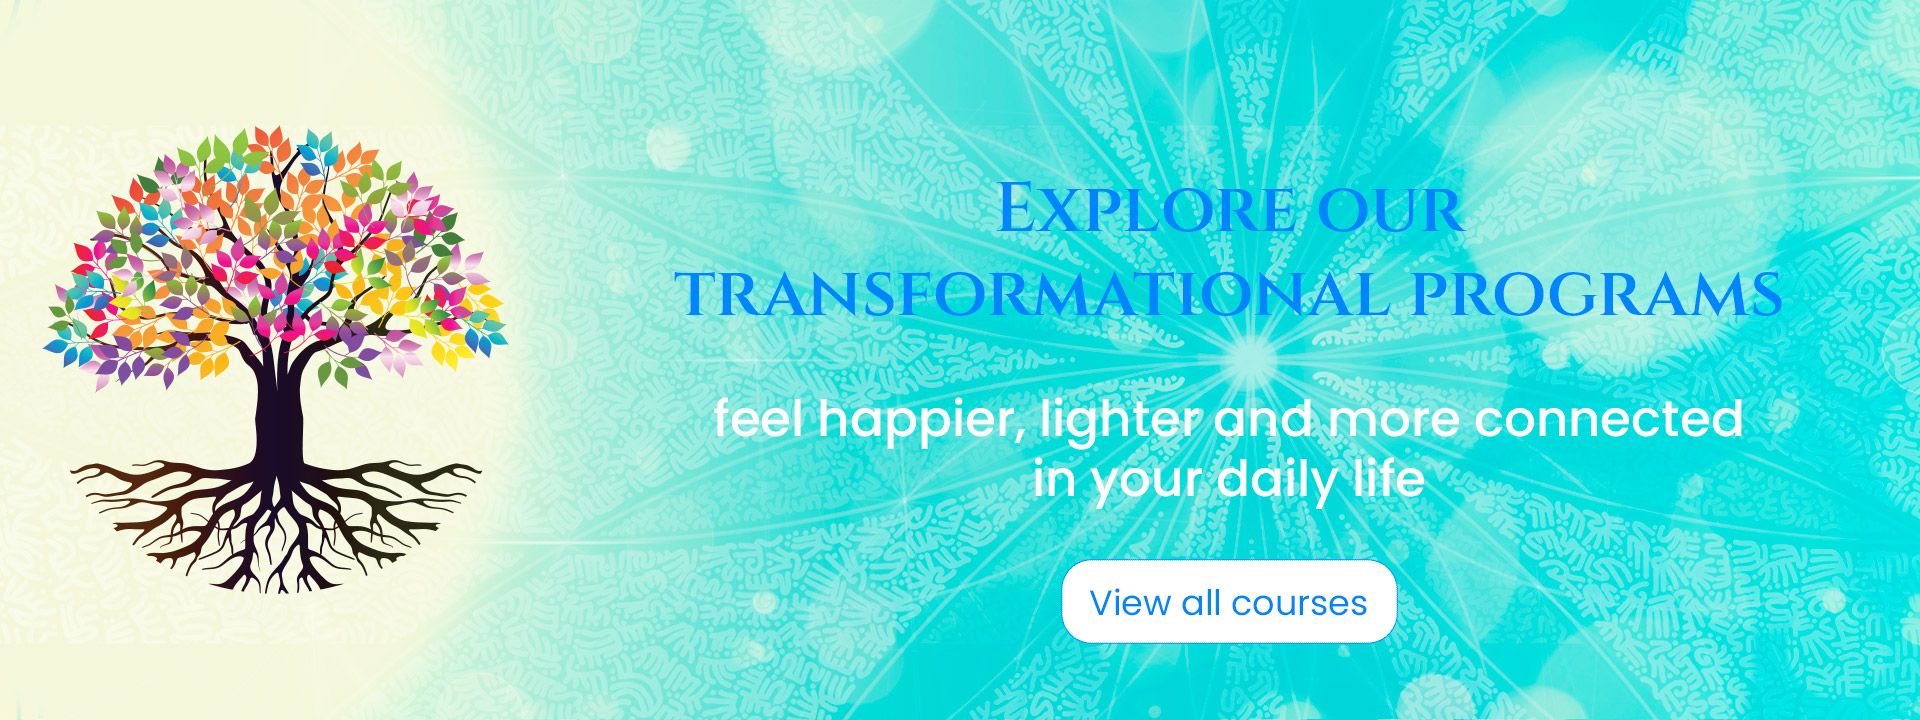 Explore our transformational programs